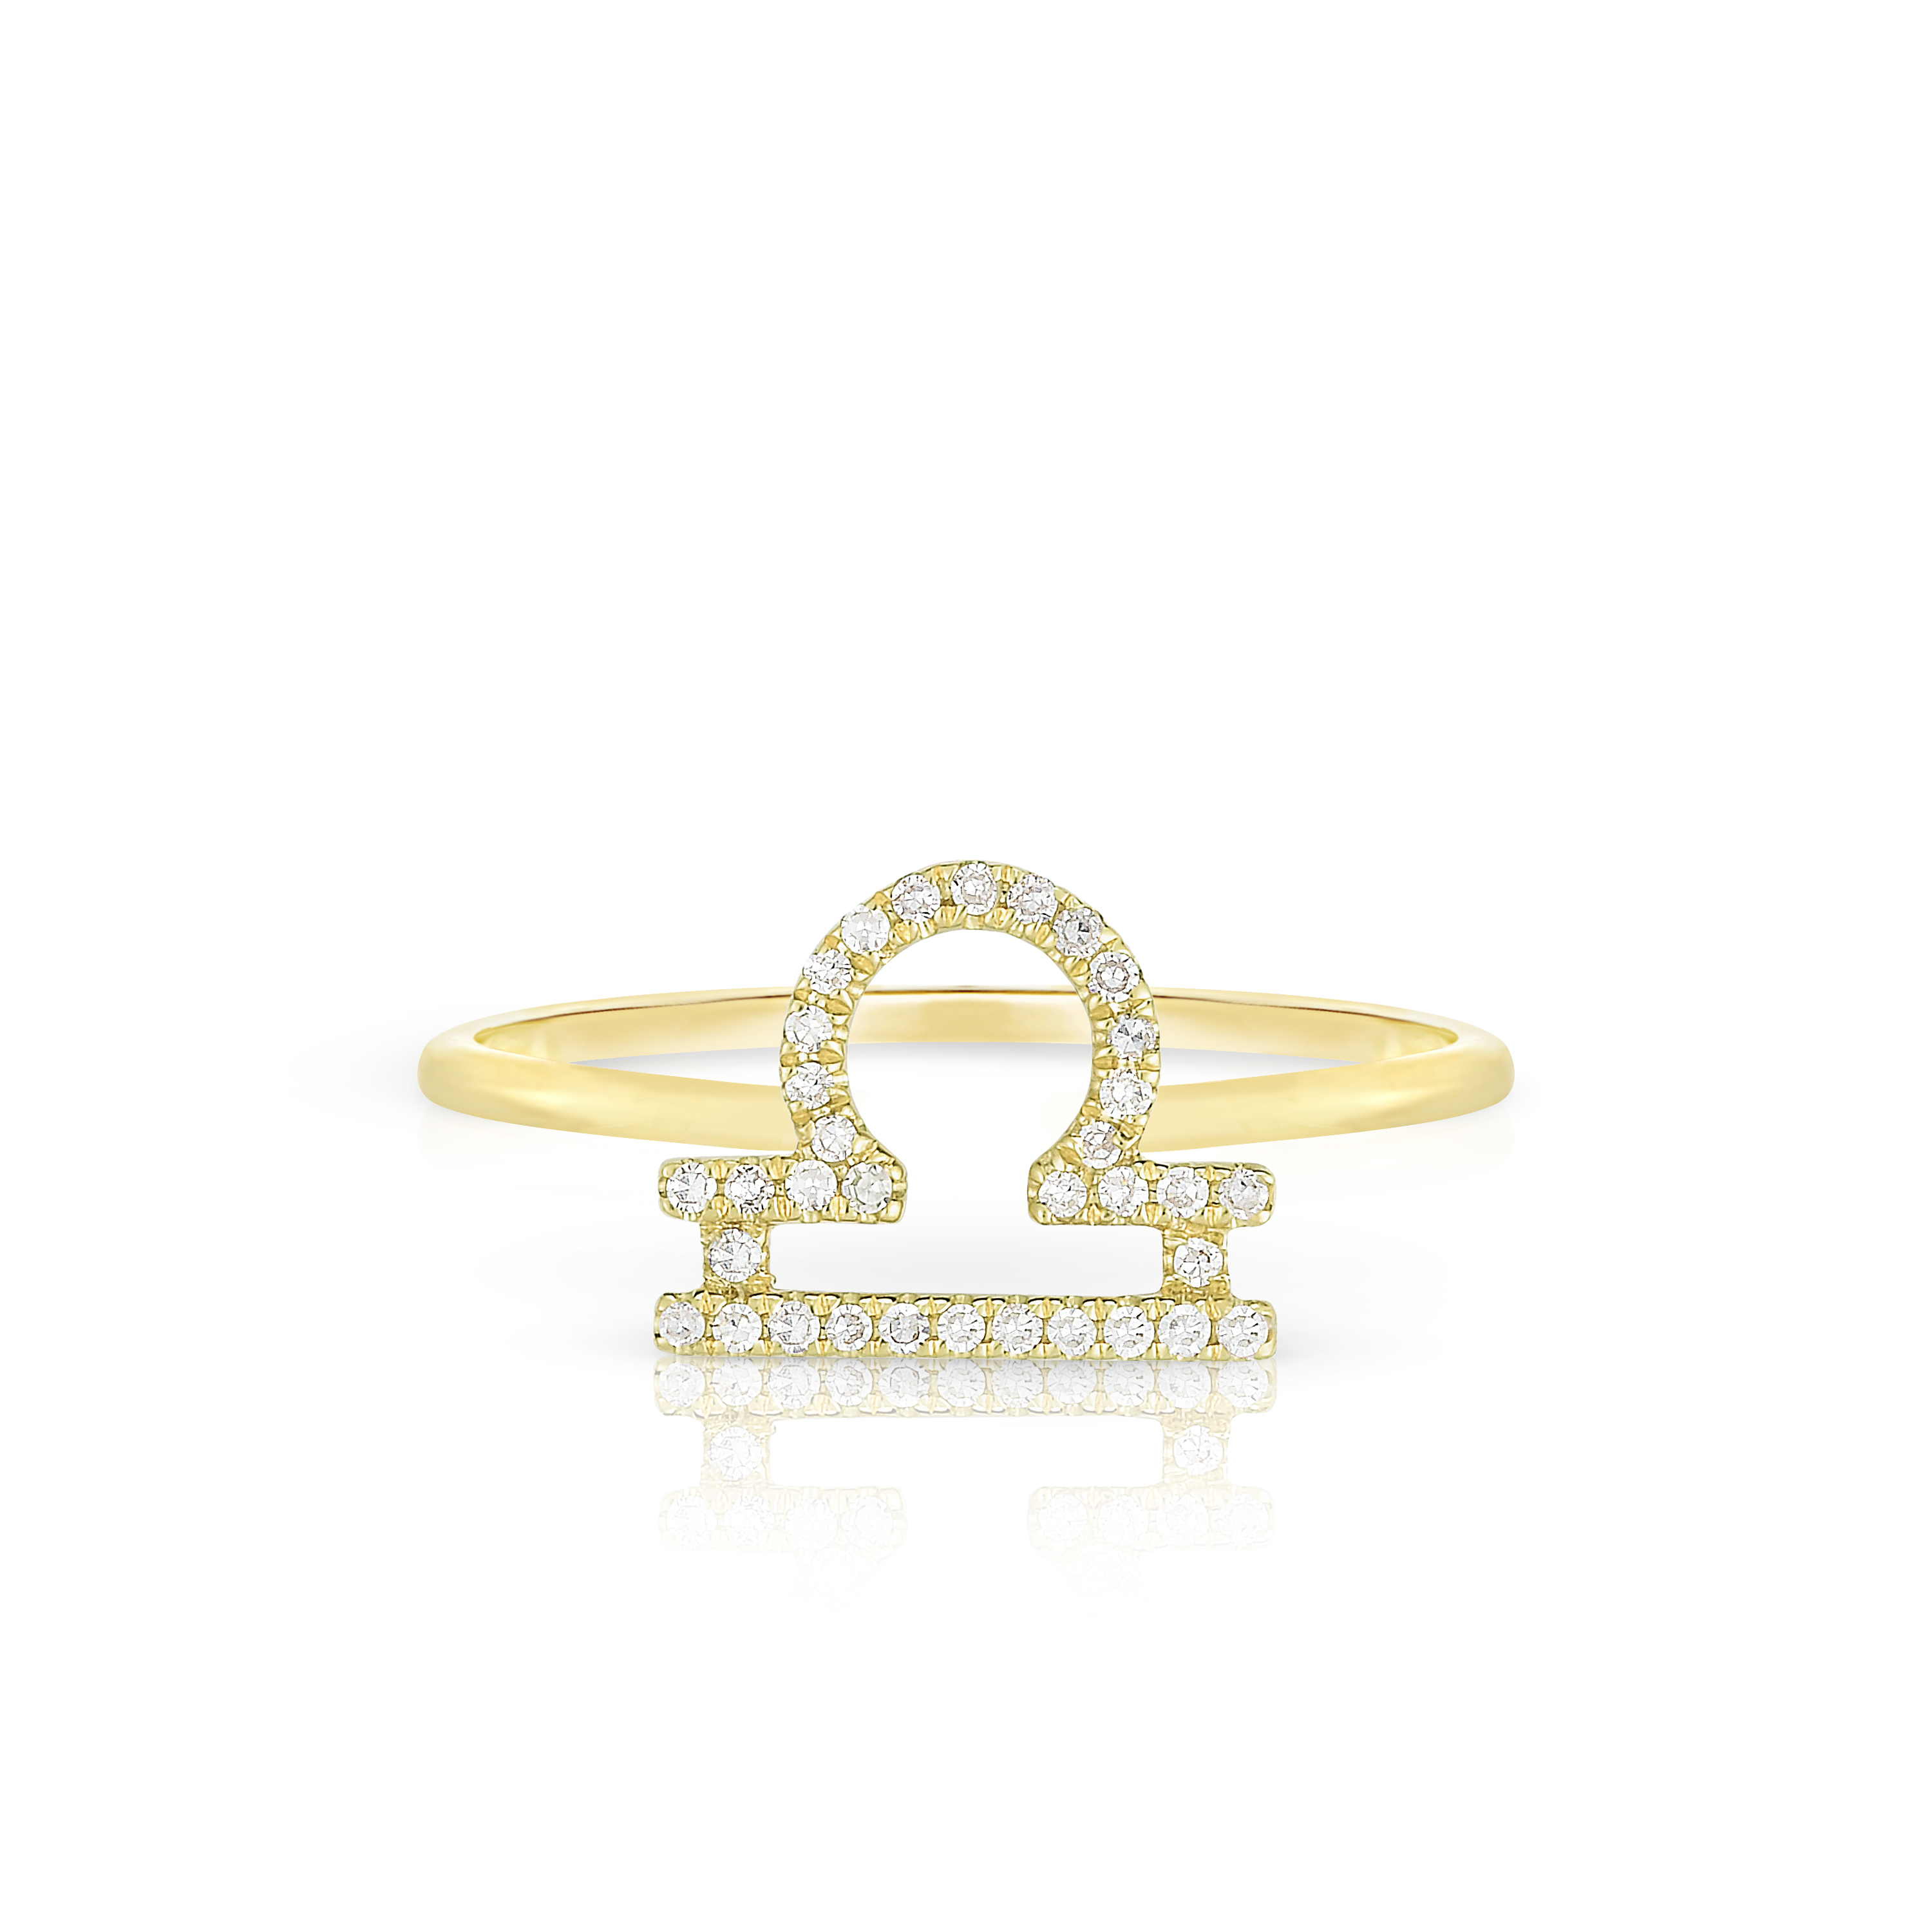 Libra Ring - 14k gold and diamonds